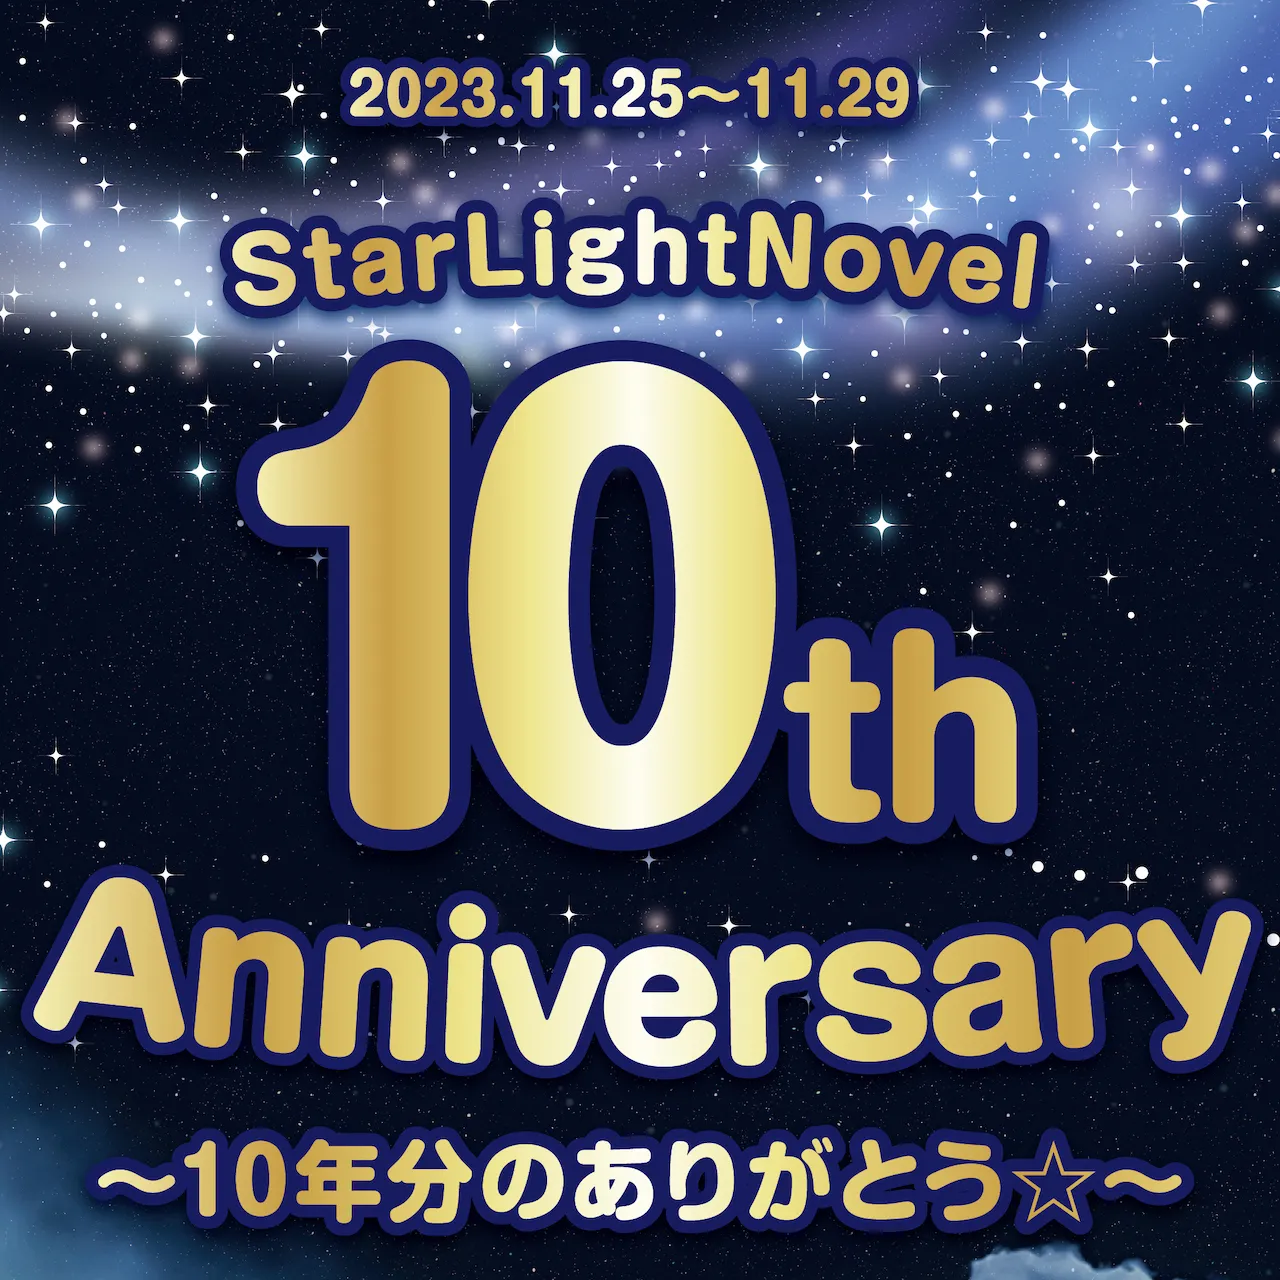 StarLightNovel 10th Anniversary　- 10年分のありがとう☆ - スターライトノベル